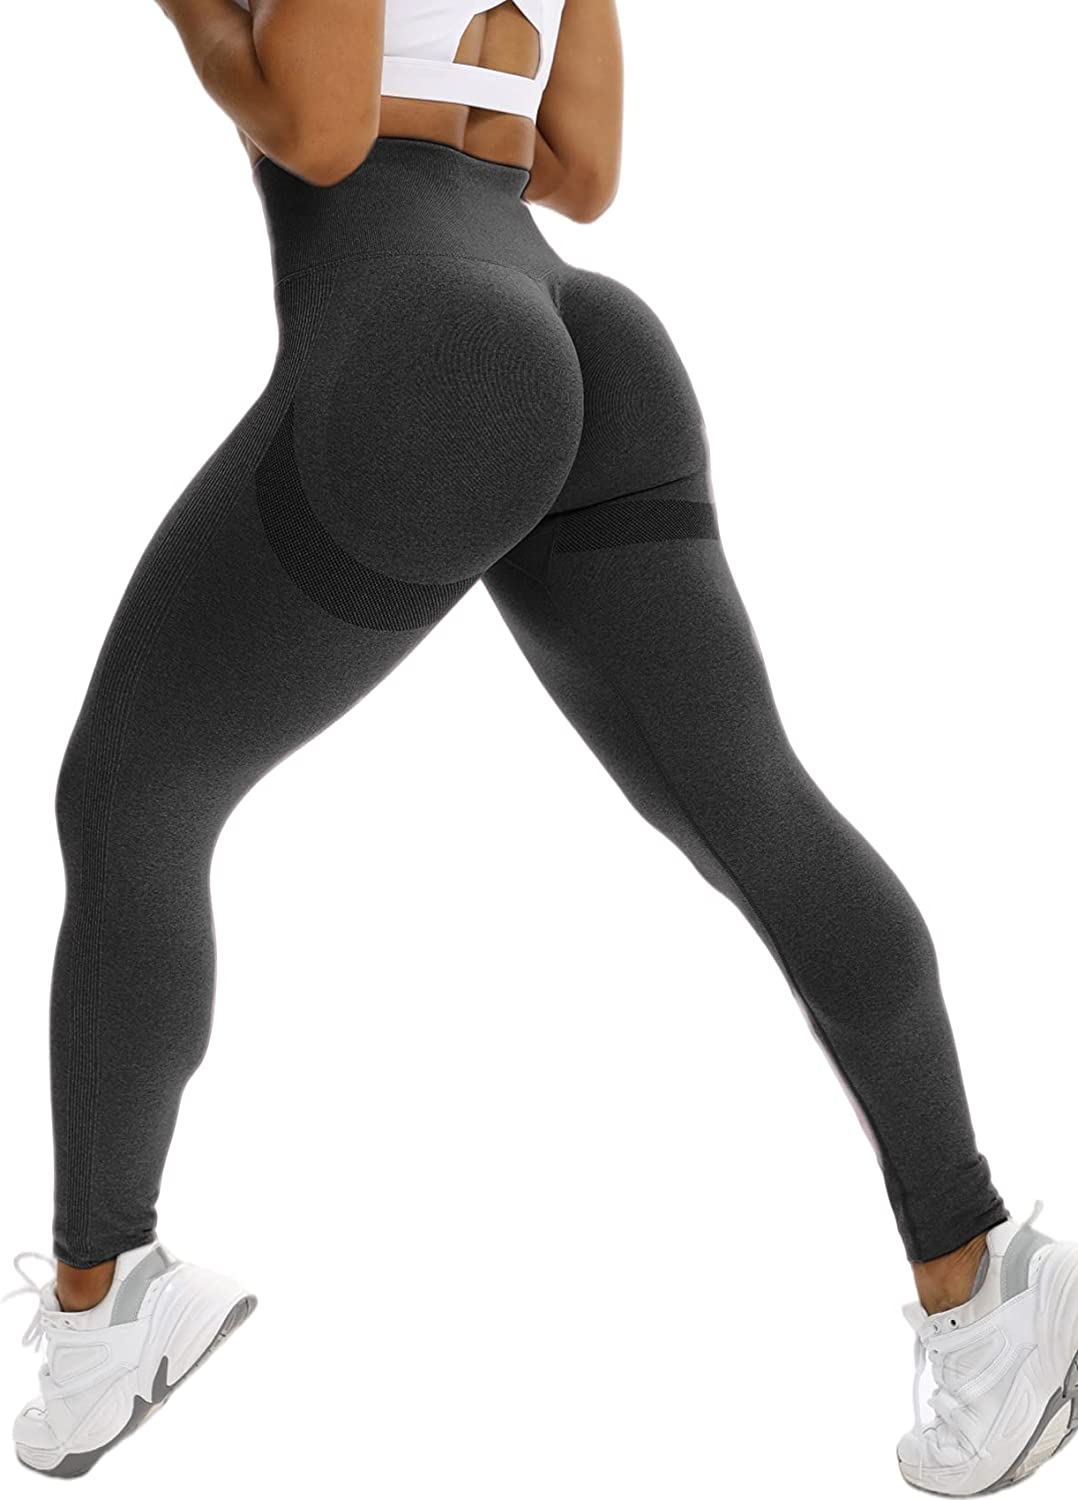 HIOINIEIY Women's Scrunch Ruched Butt Lifting Booty Enhancing